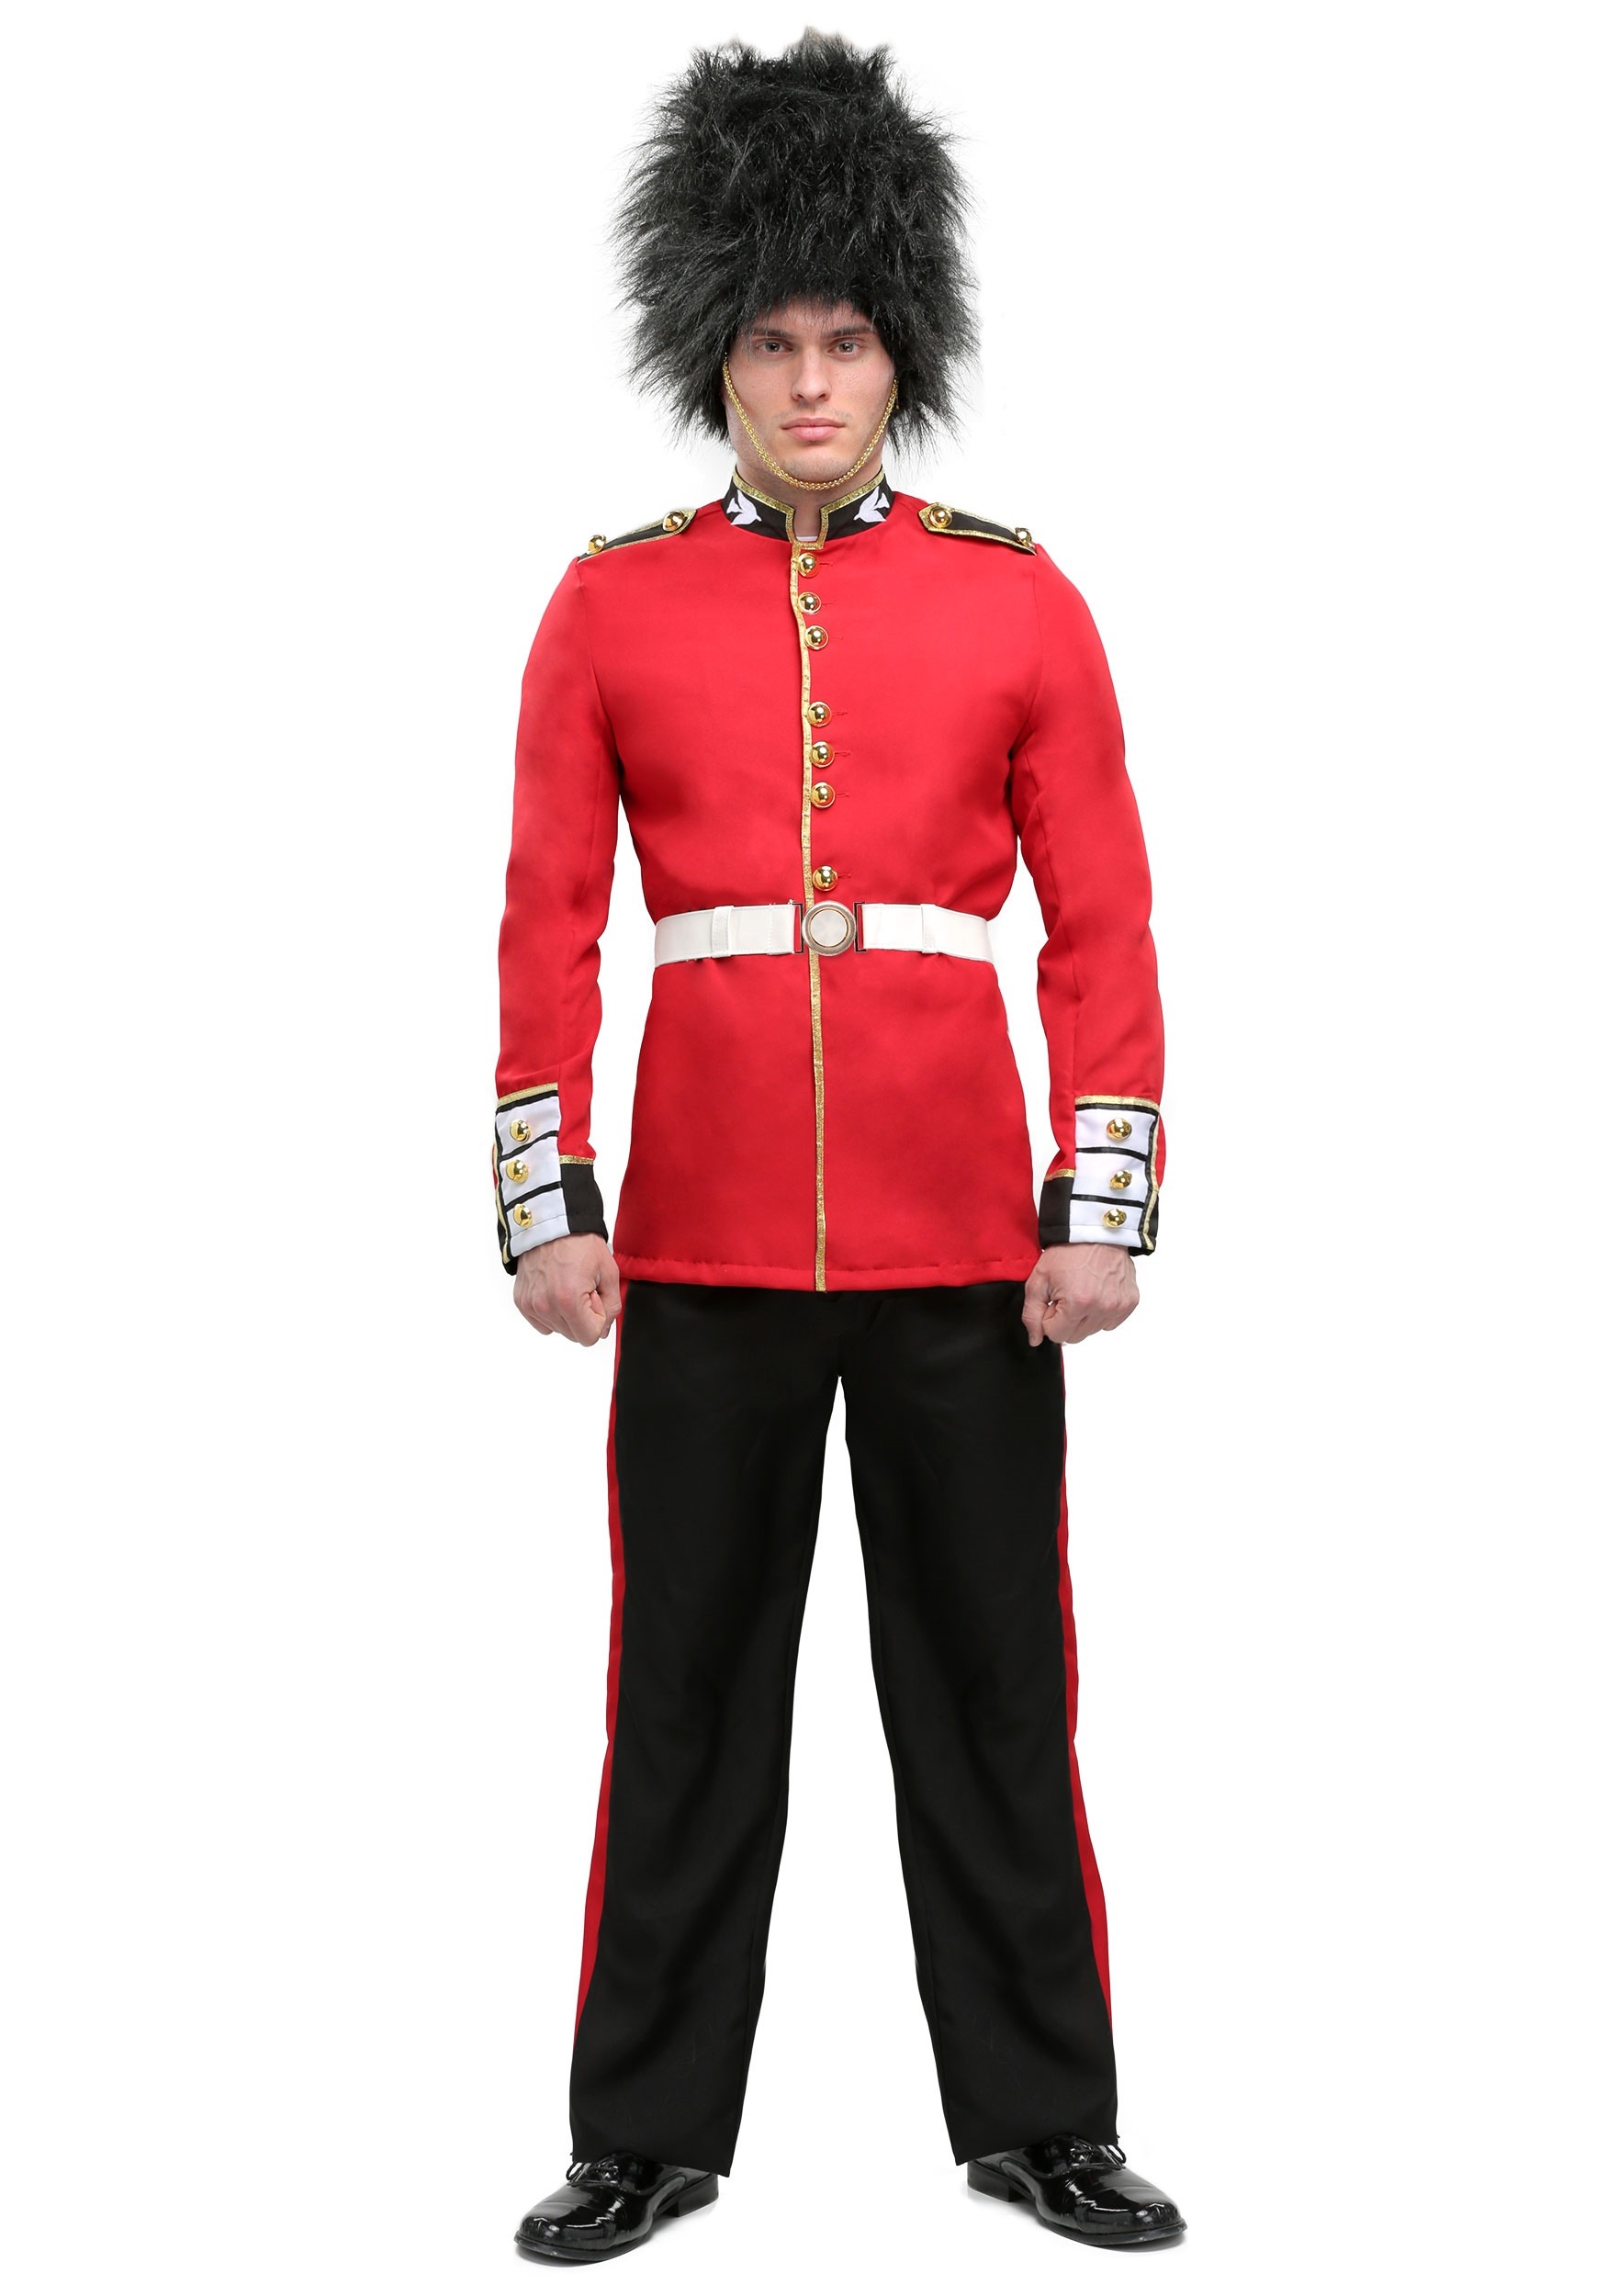 Royal Guard Fancy Dress Costume